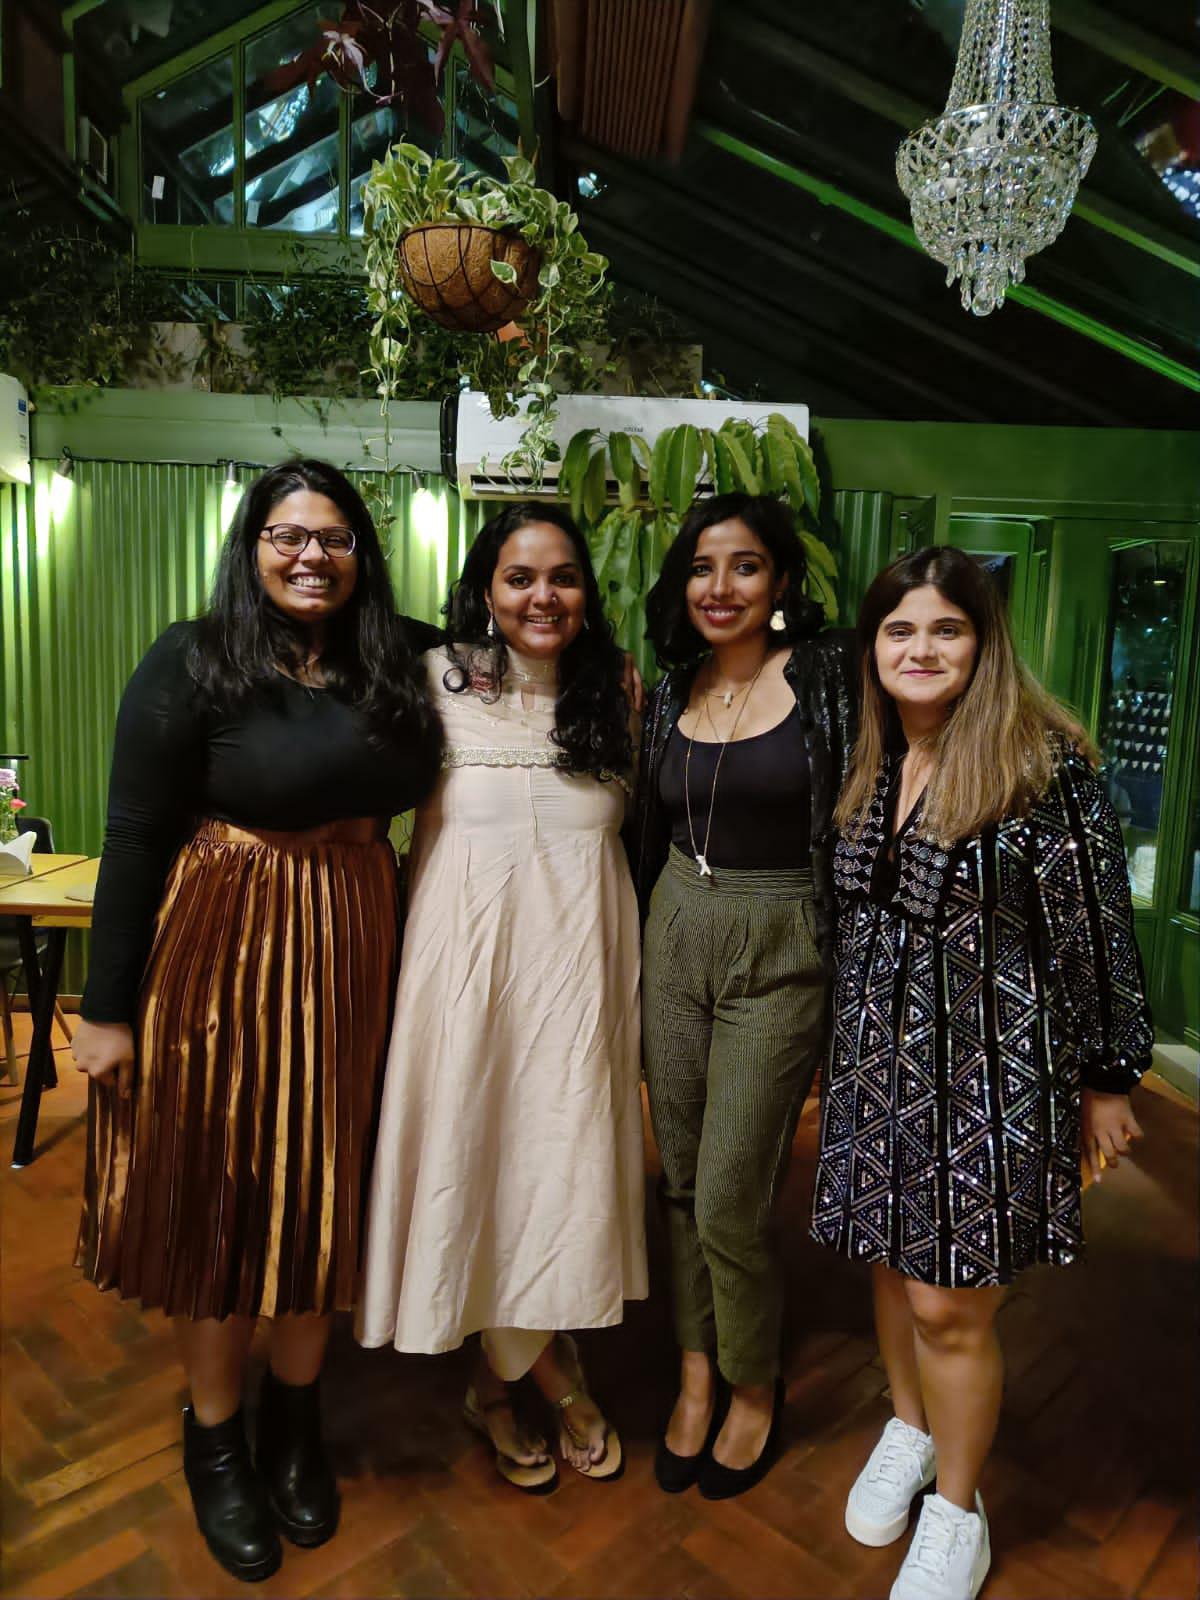 (L-R) Elizabeth Yorke and Anusha Murthy of Edible Issues,
Anisha Rachel Oommen, and Aysha Tanya of Goya Media